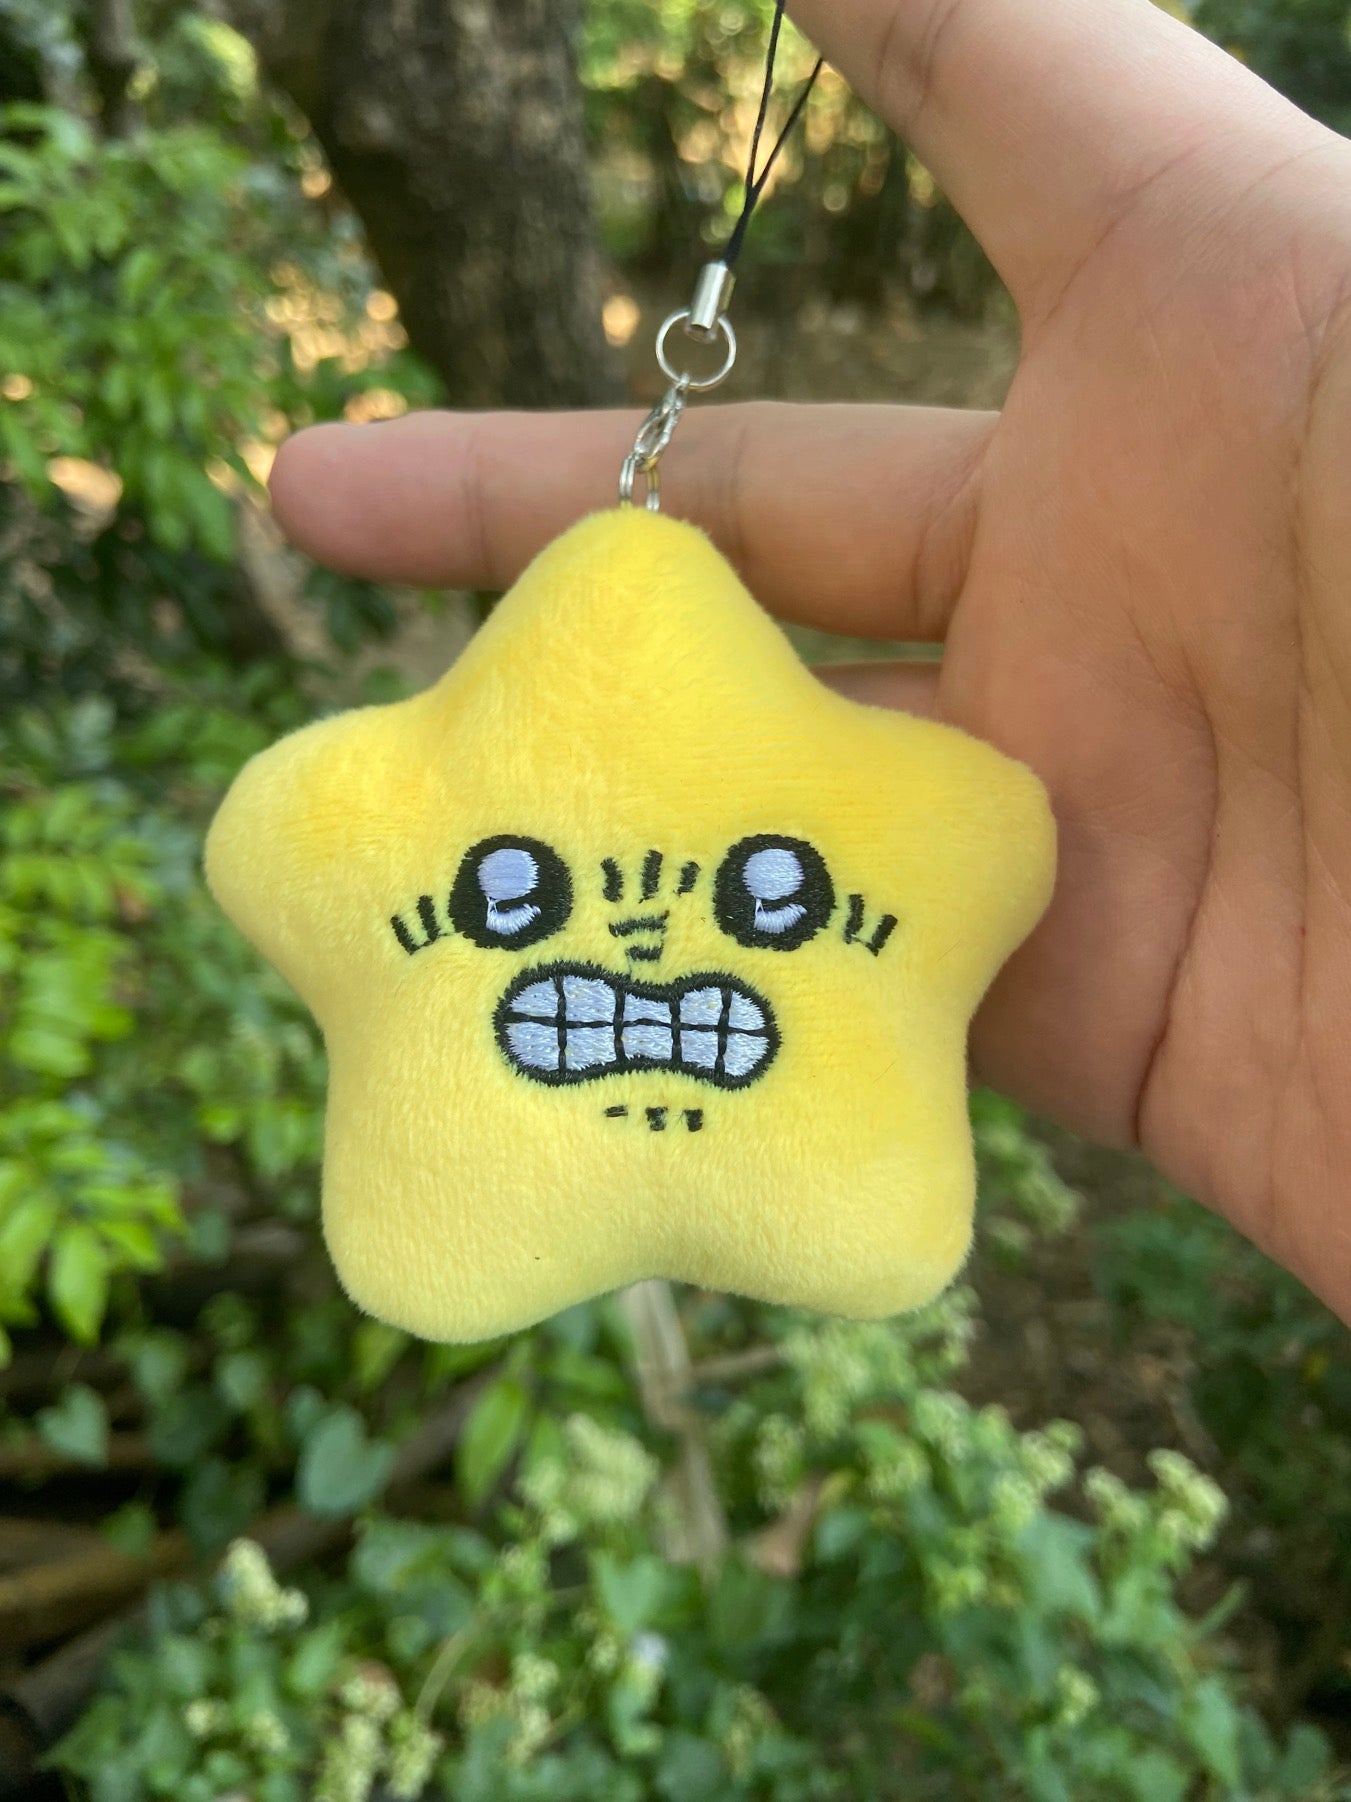 Japan ChiiKawa Shooting Star Keychain | Angry Smile Cute - Mini Plush Doll Keychain